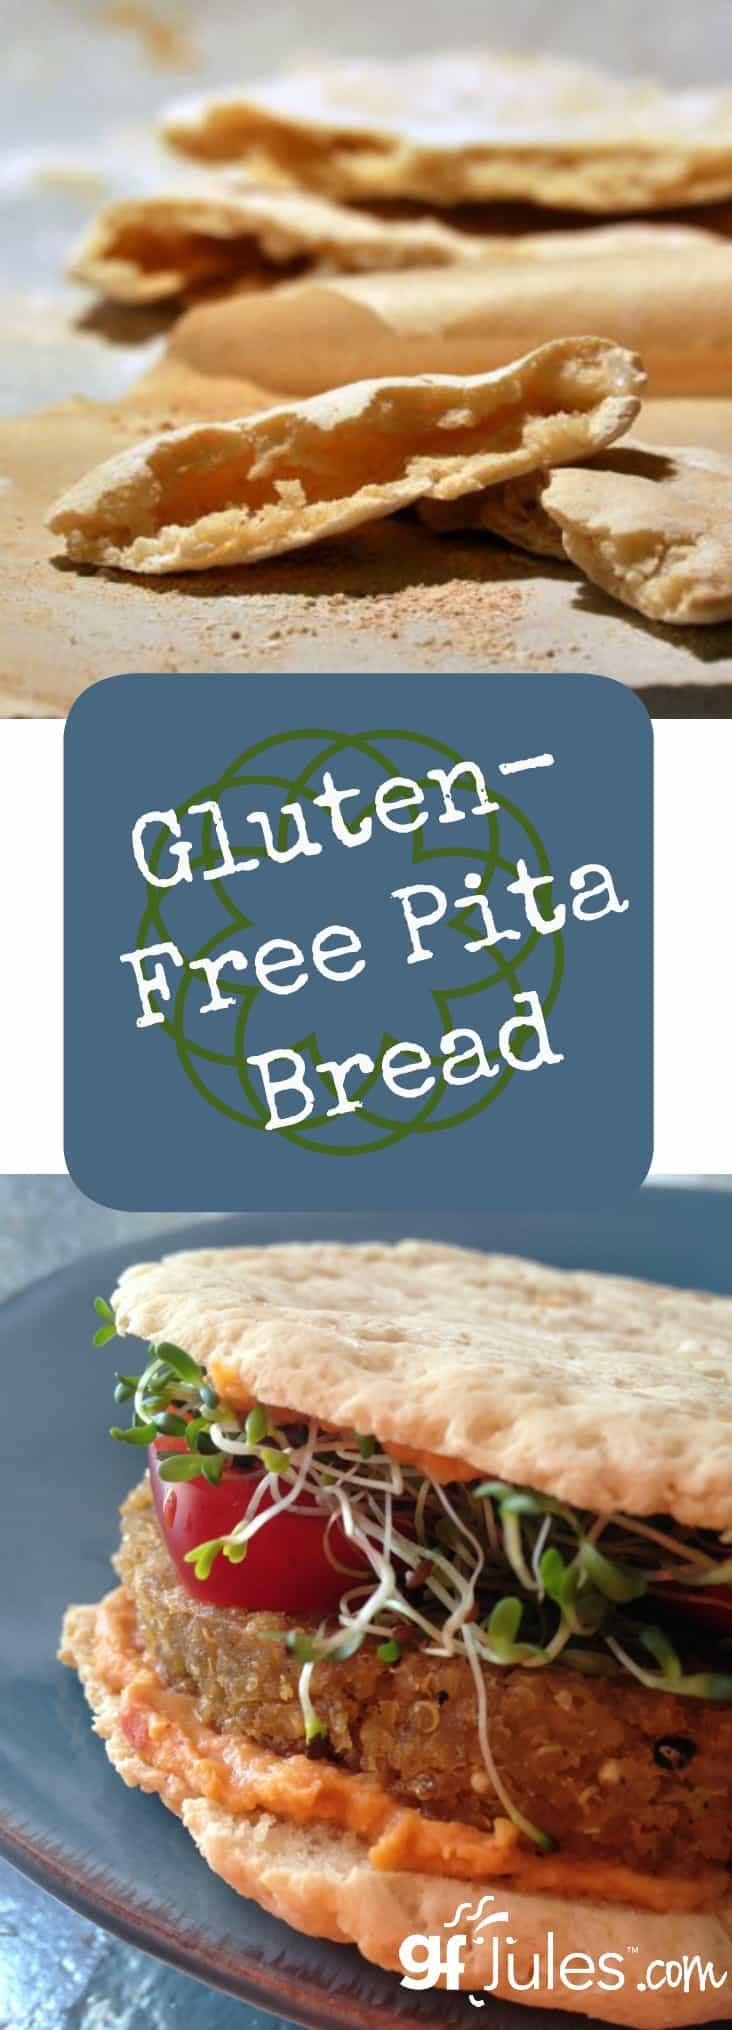 Pita Bread Gluten Free
 Gluten Free Pita or Naan Flatbreads make em authentic w